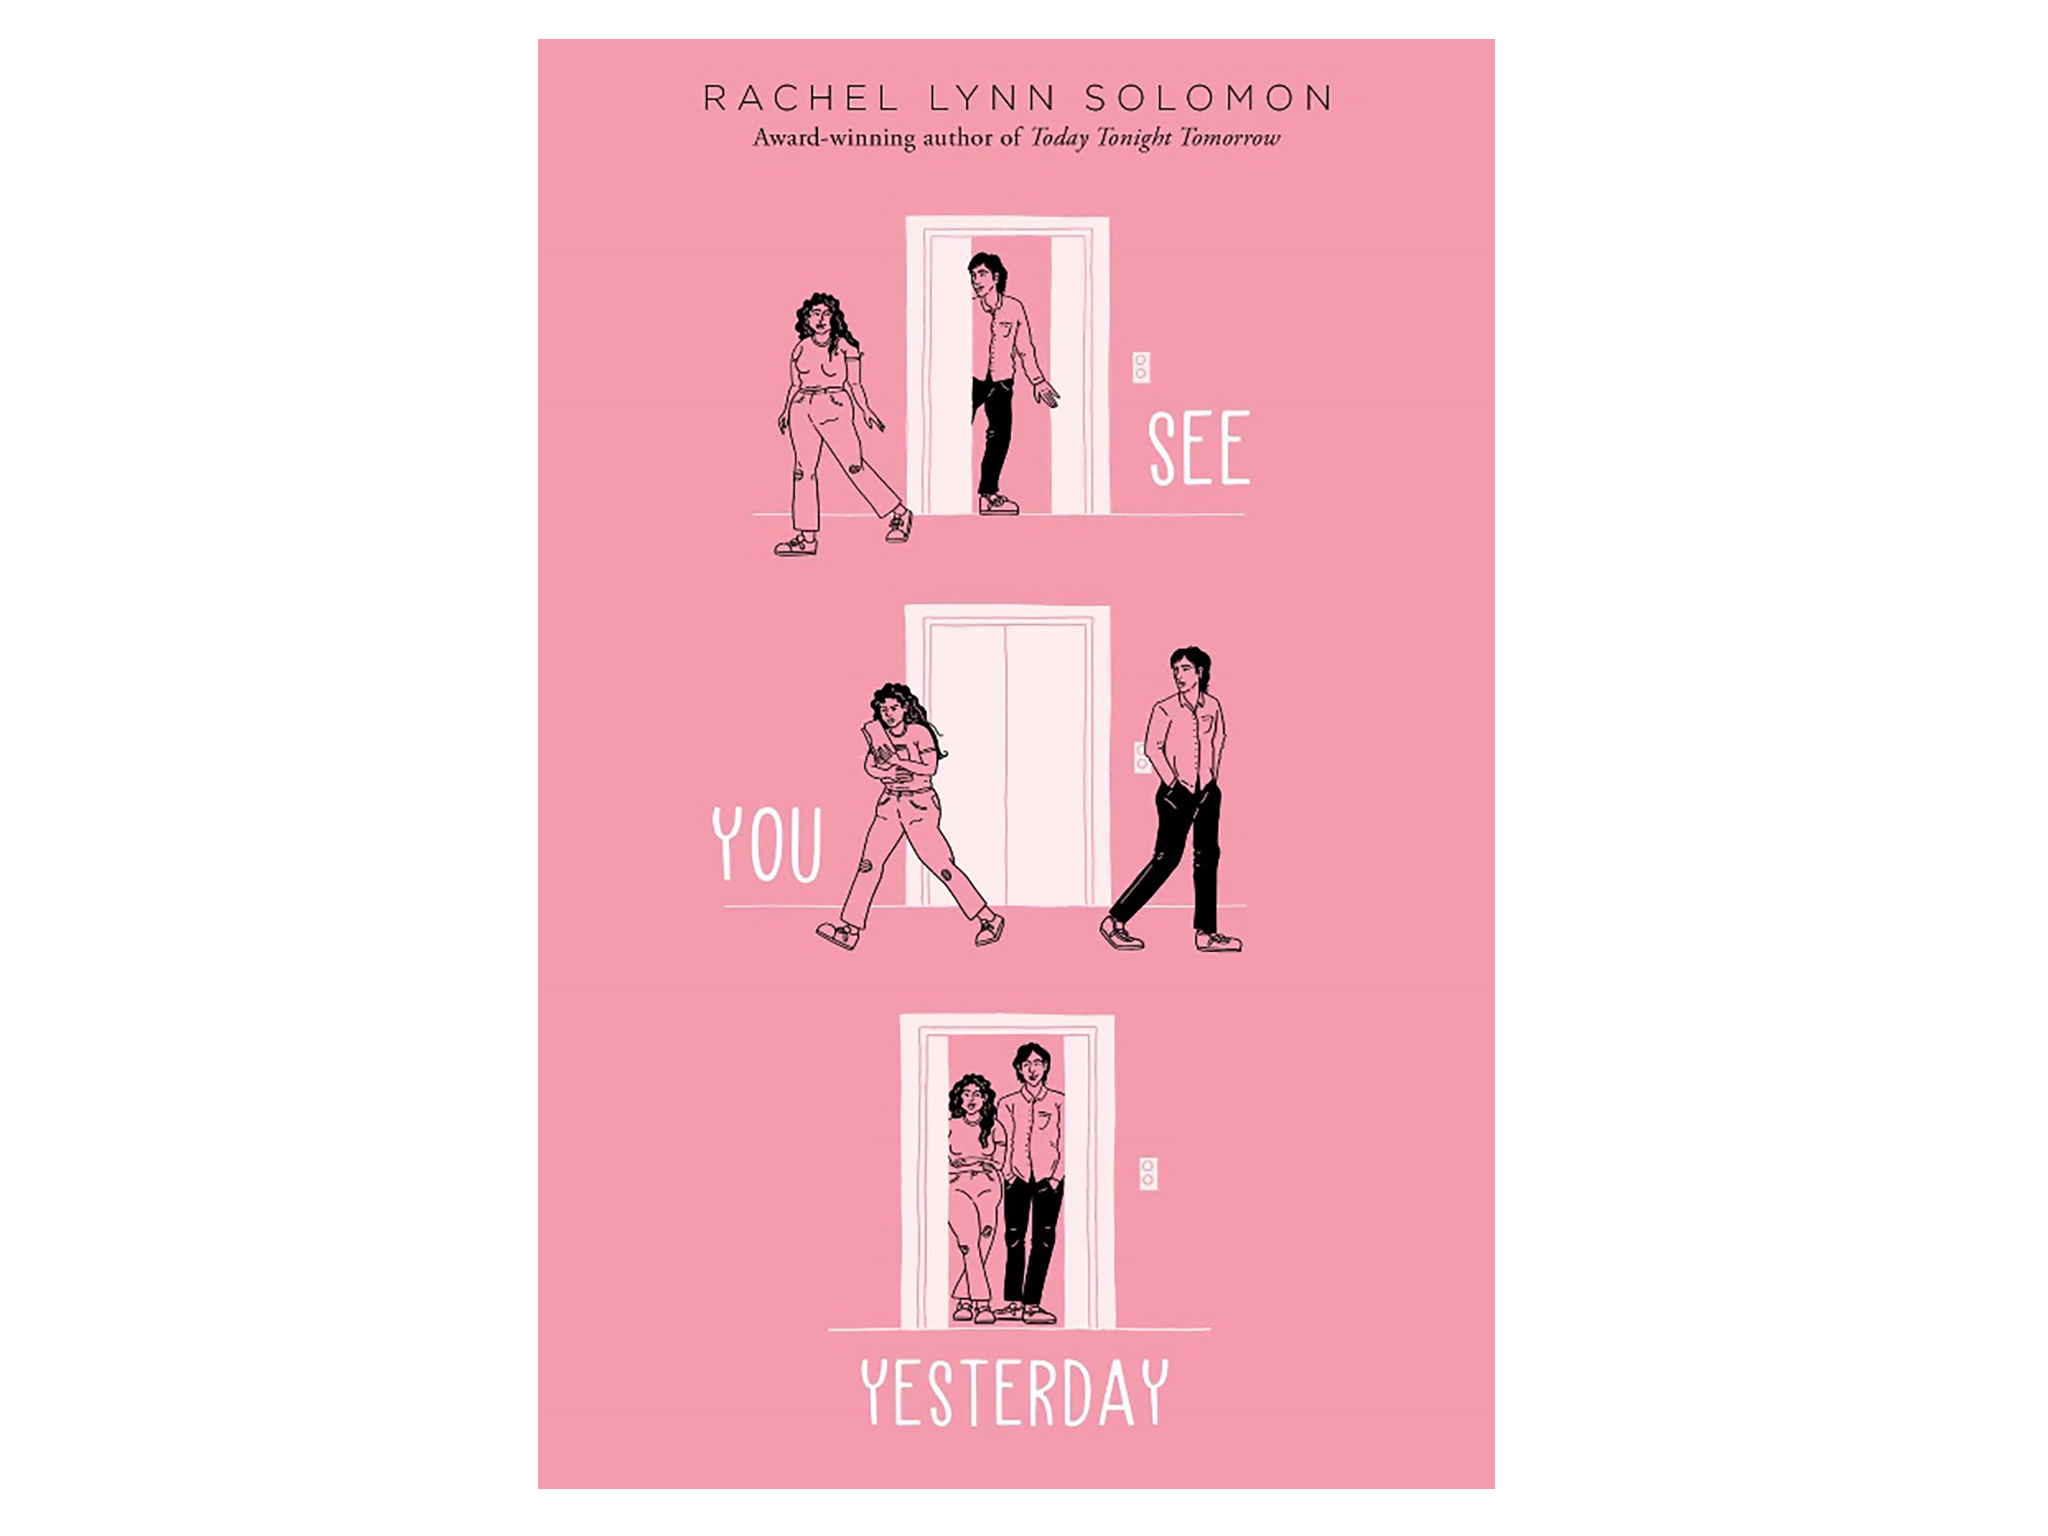 See you Yesterday by Rachel Lynn Solomon